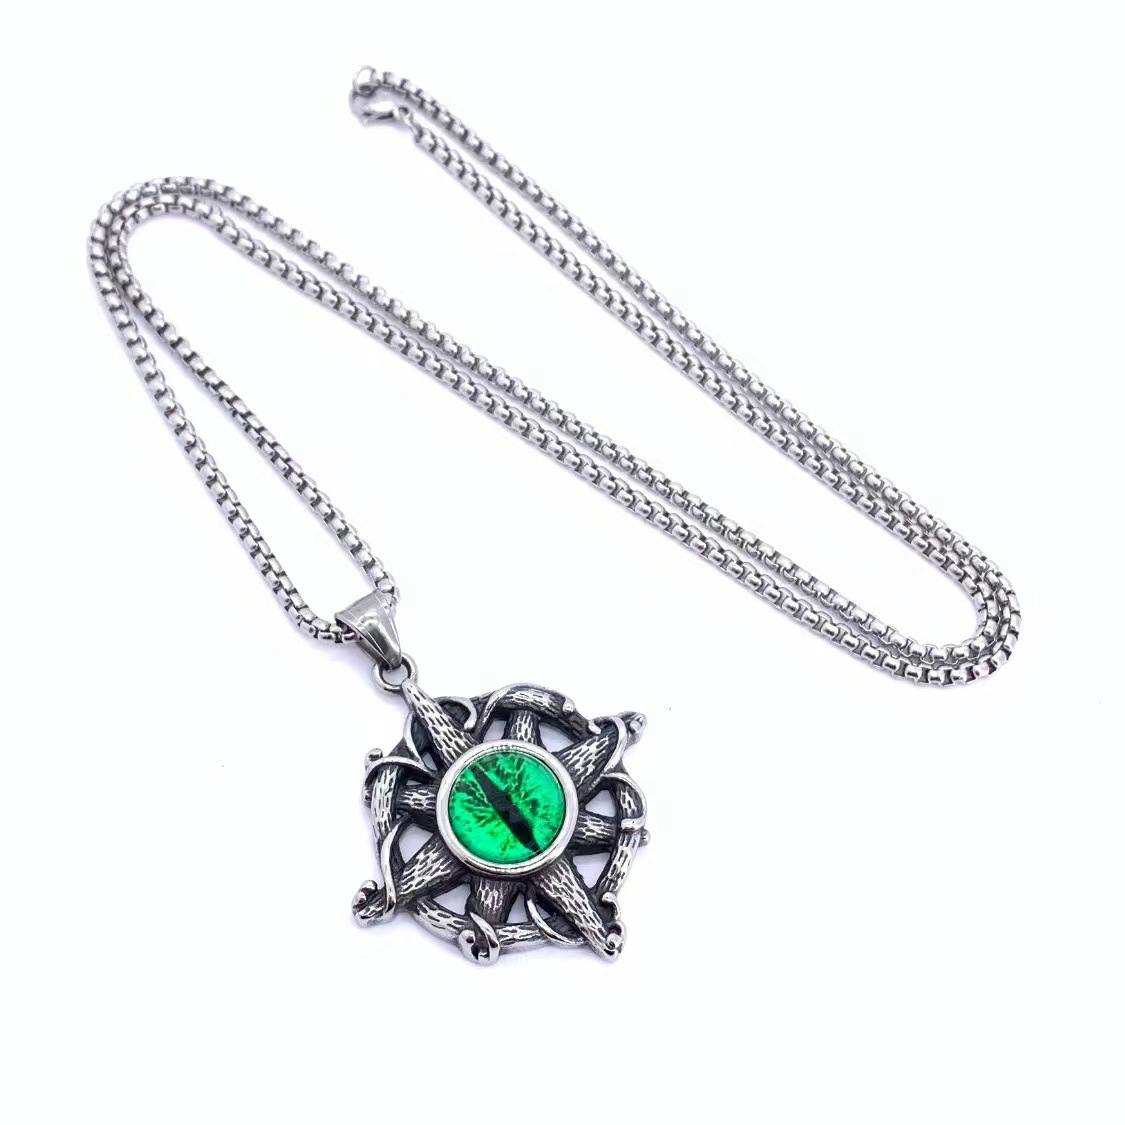 Green-eye pendant with 60CM chain